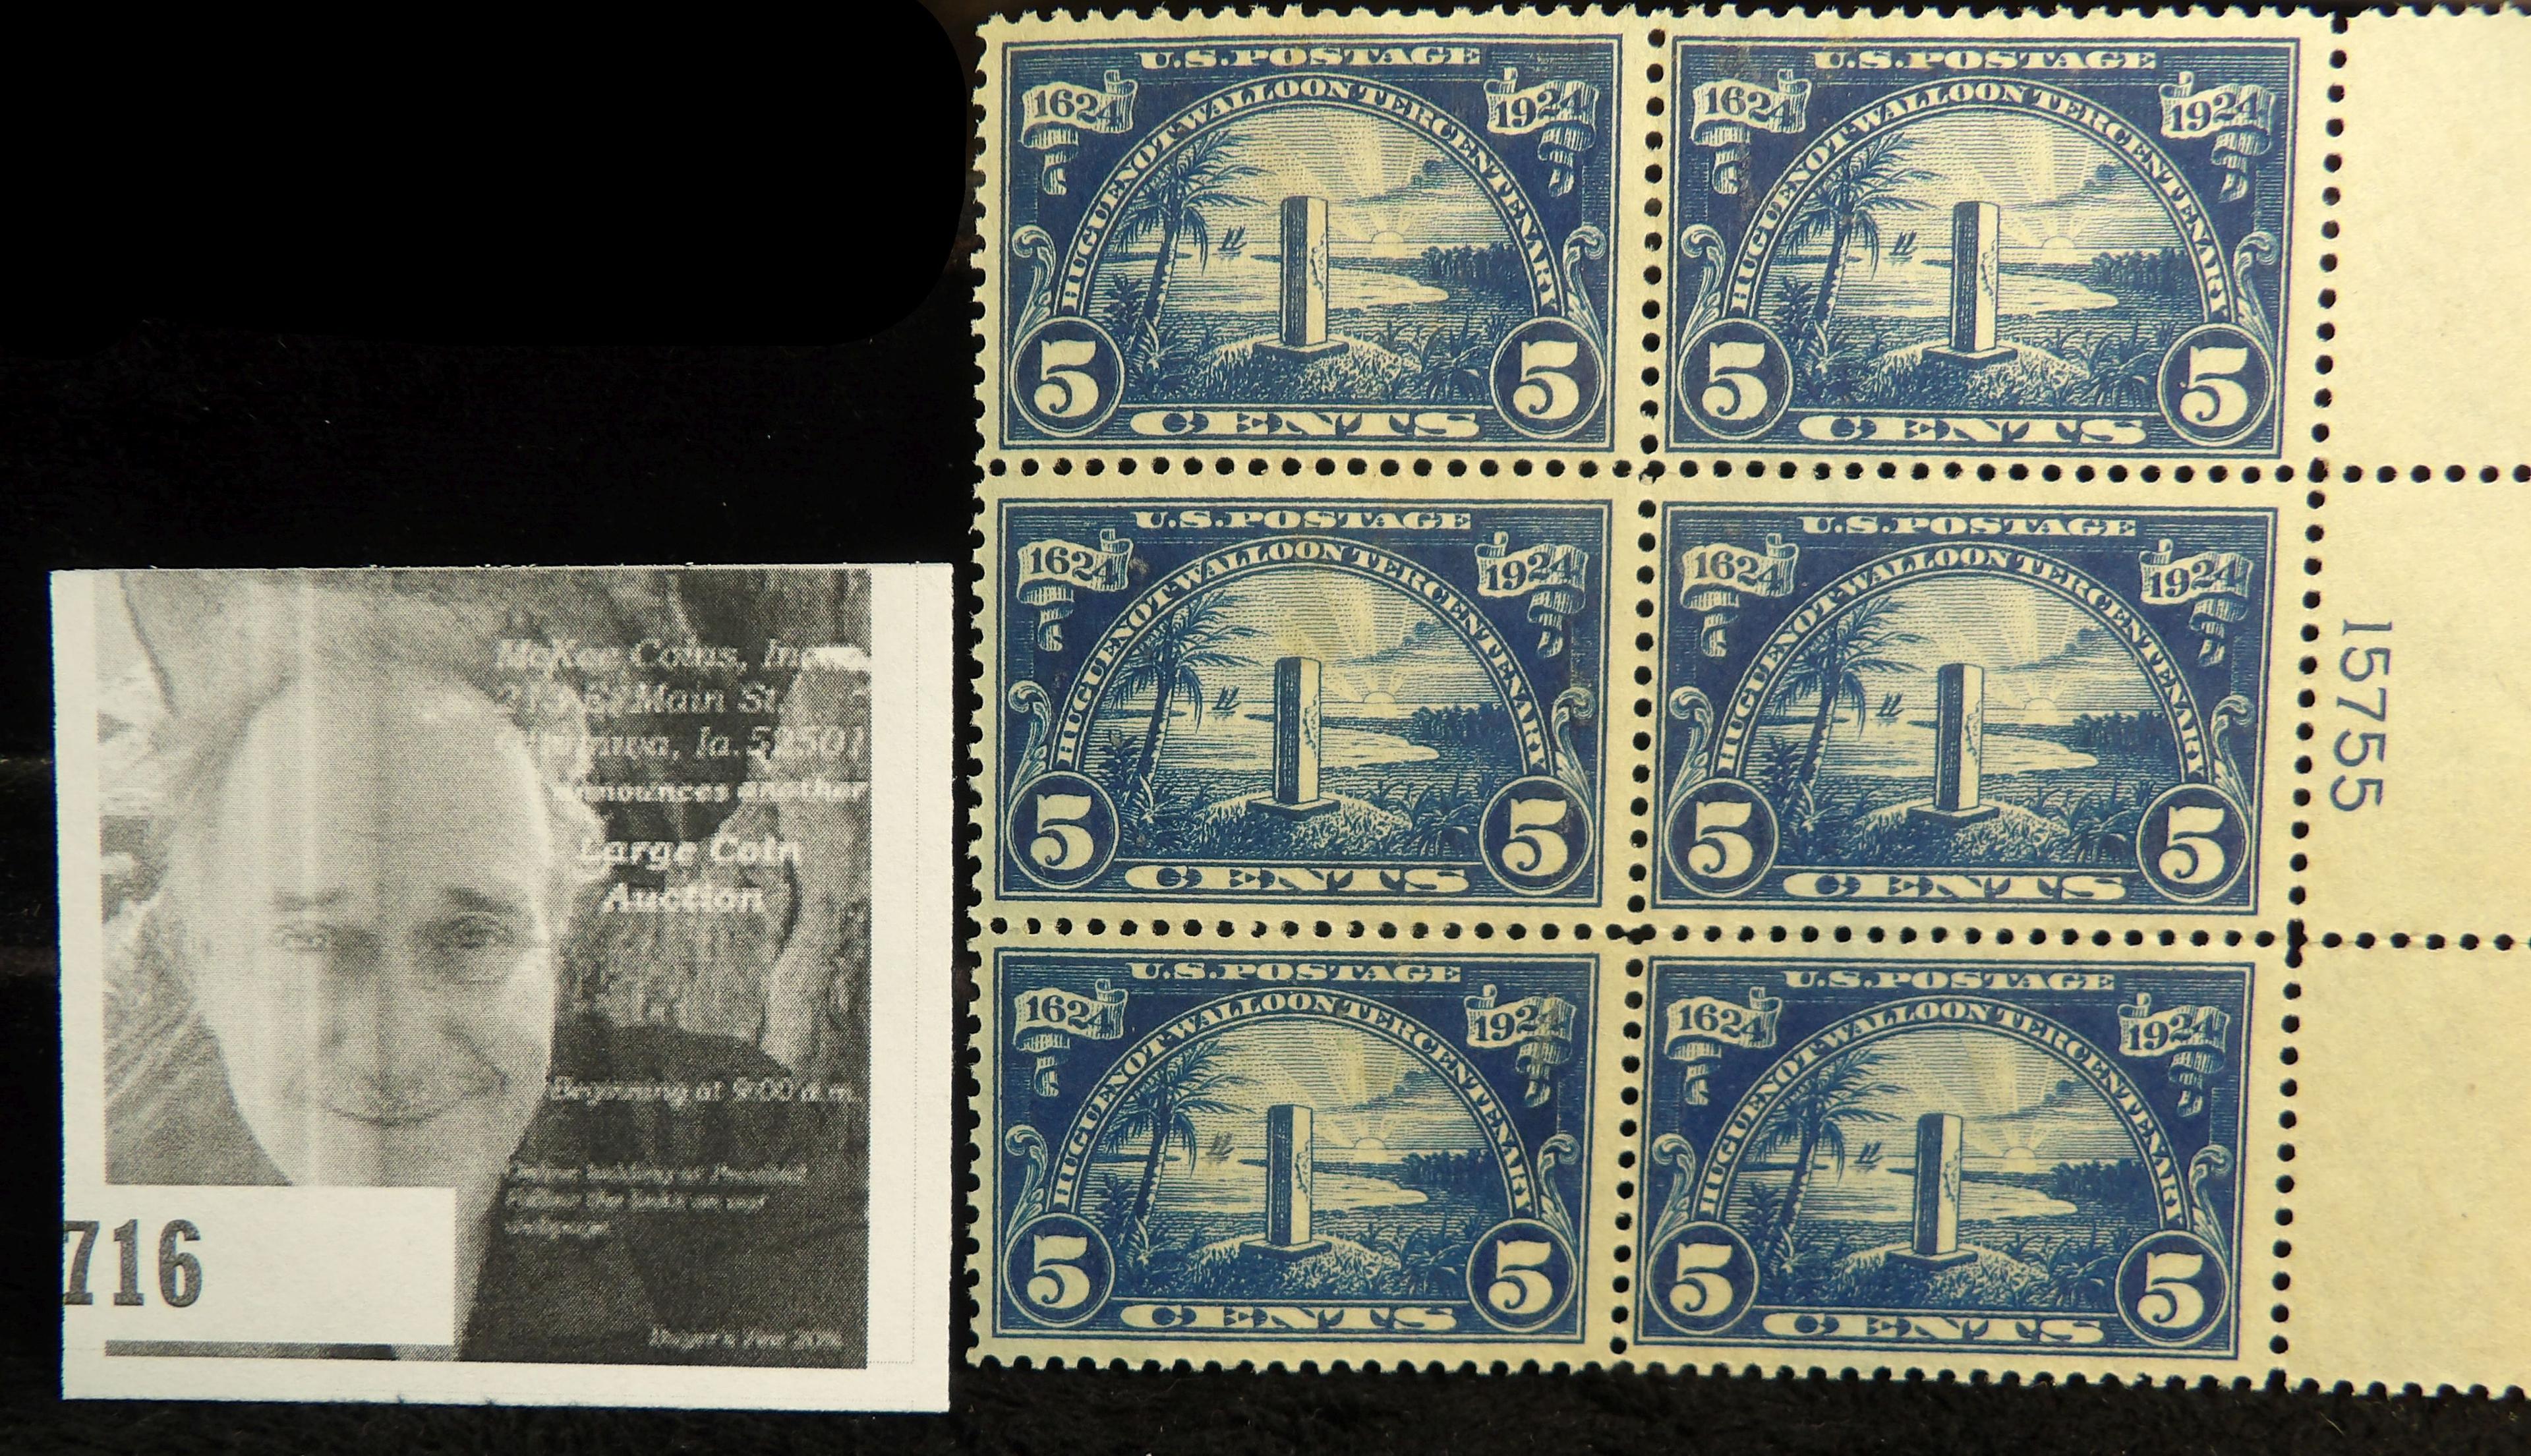 Six-Stamp Mint Plate block 1624-1924 Huguenot Walloon Tercentenary 5c Stamps Scott # 616, NG. Quite